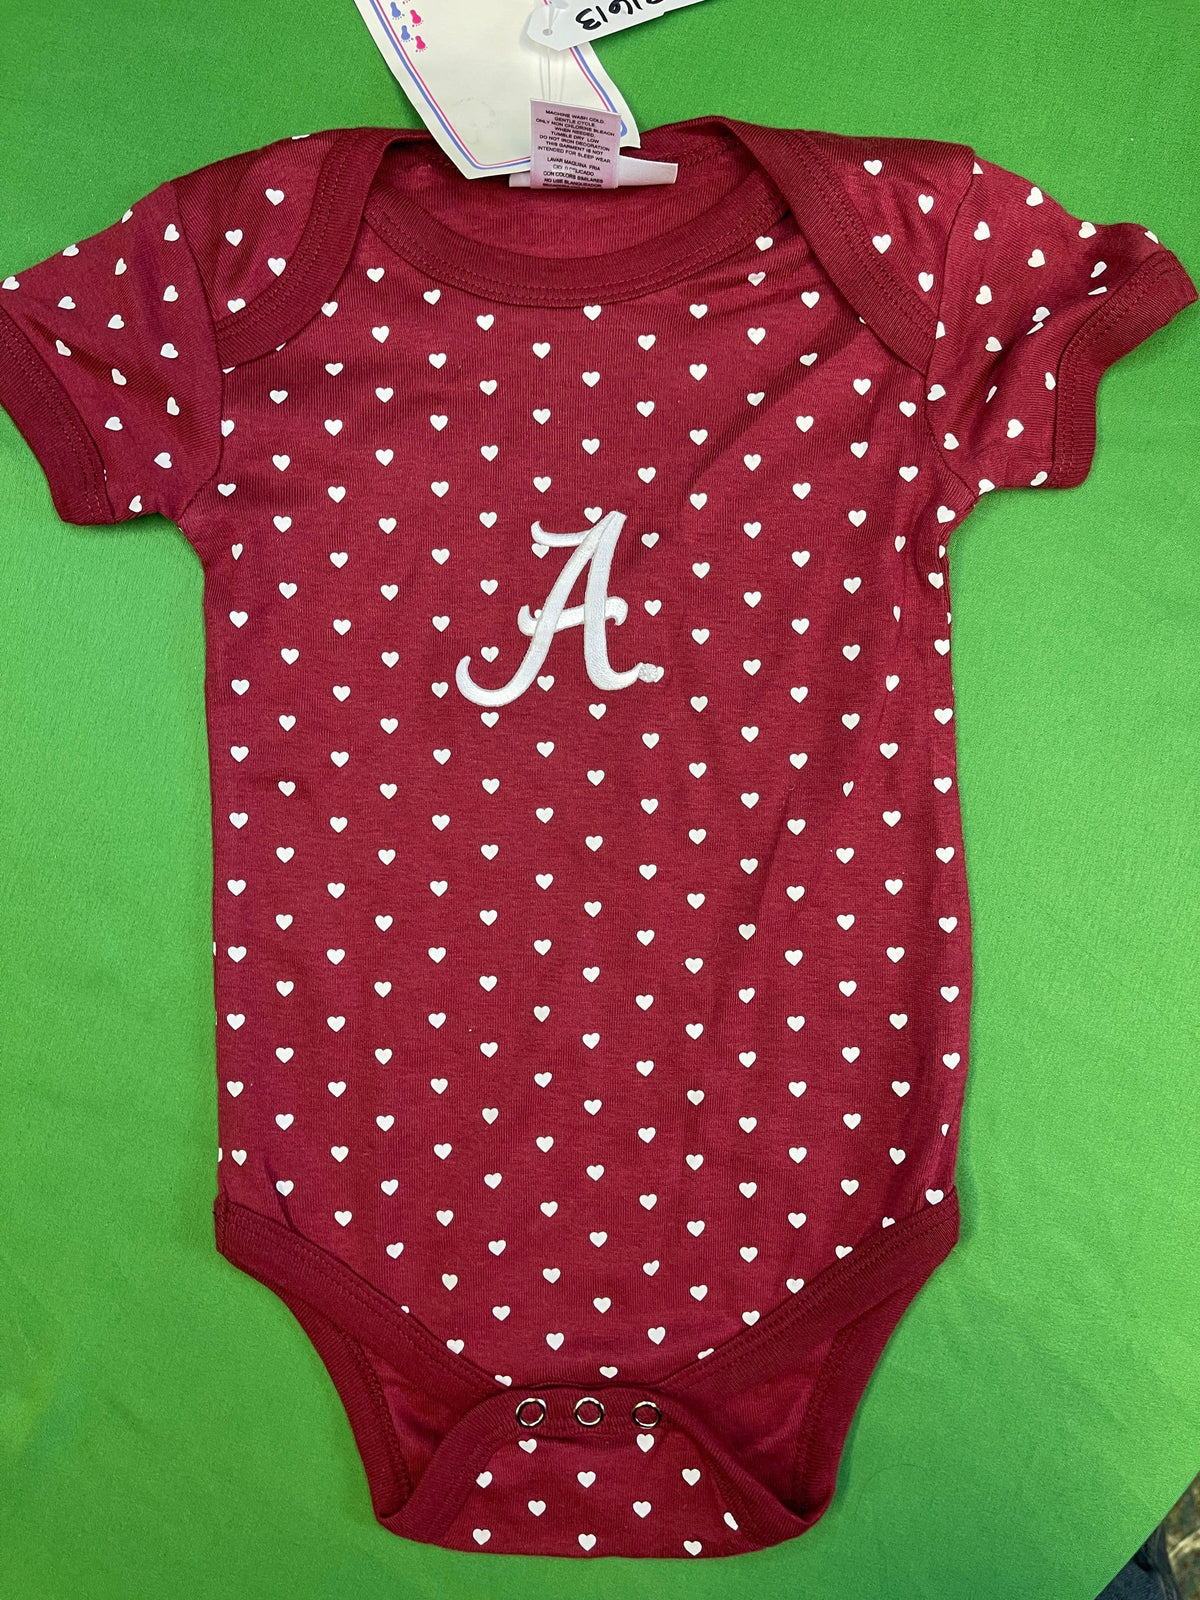 NCAA Alabama Crimson Tide Hearts Infant Baby Bodysuit/Vest 12 months NWT